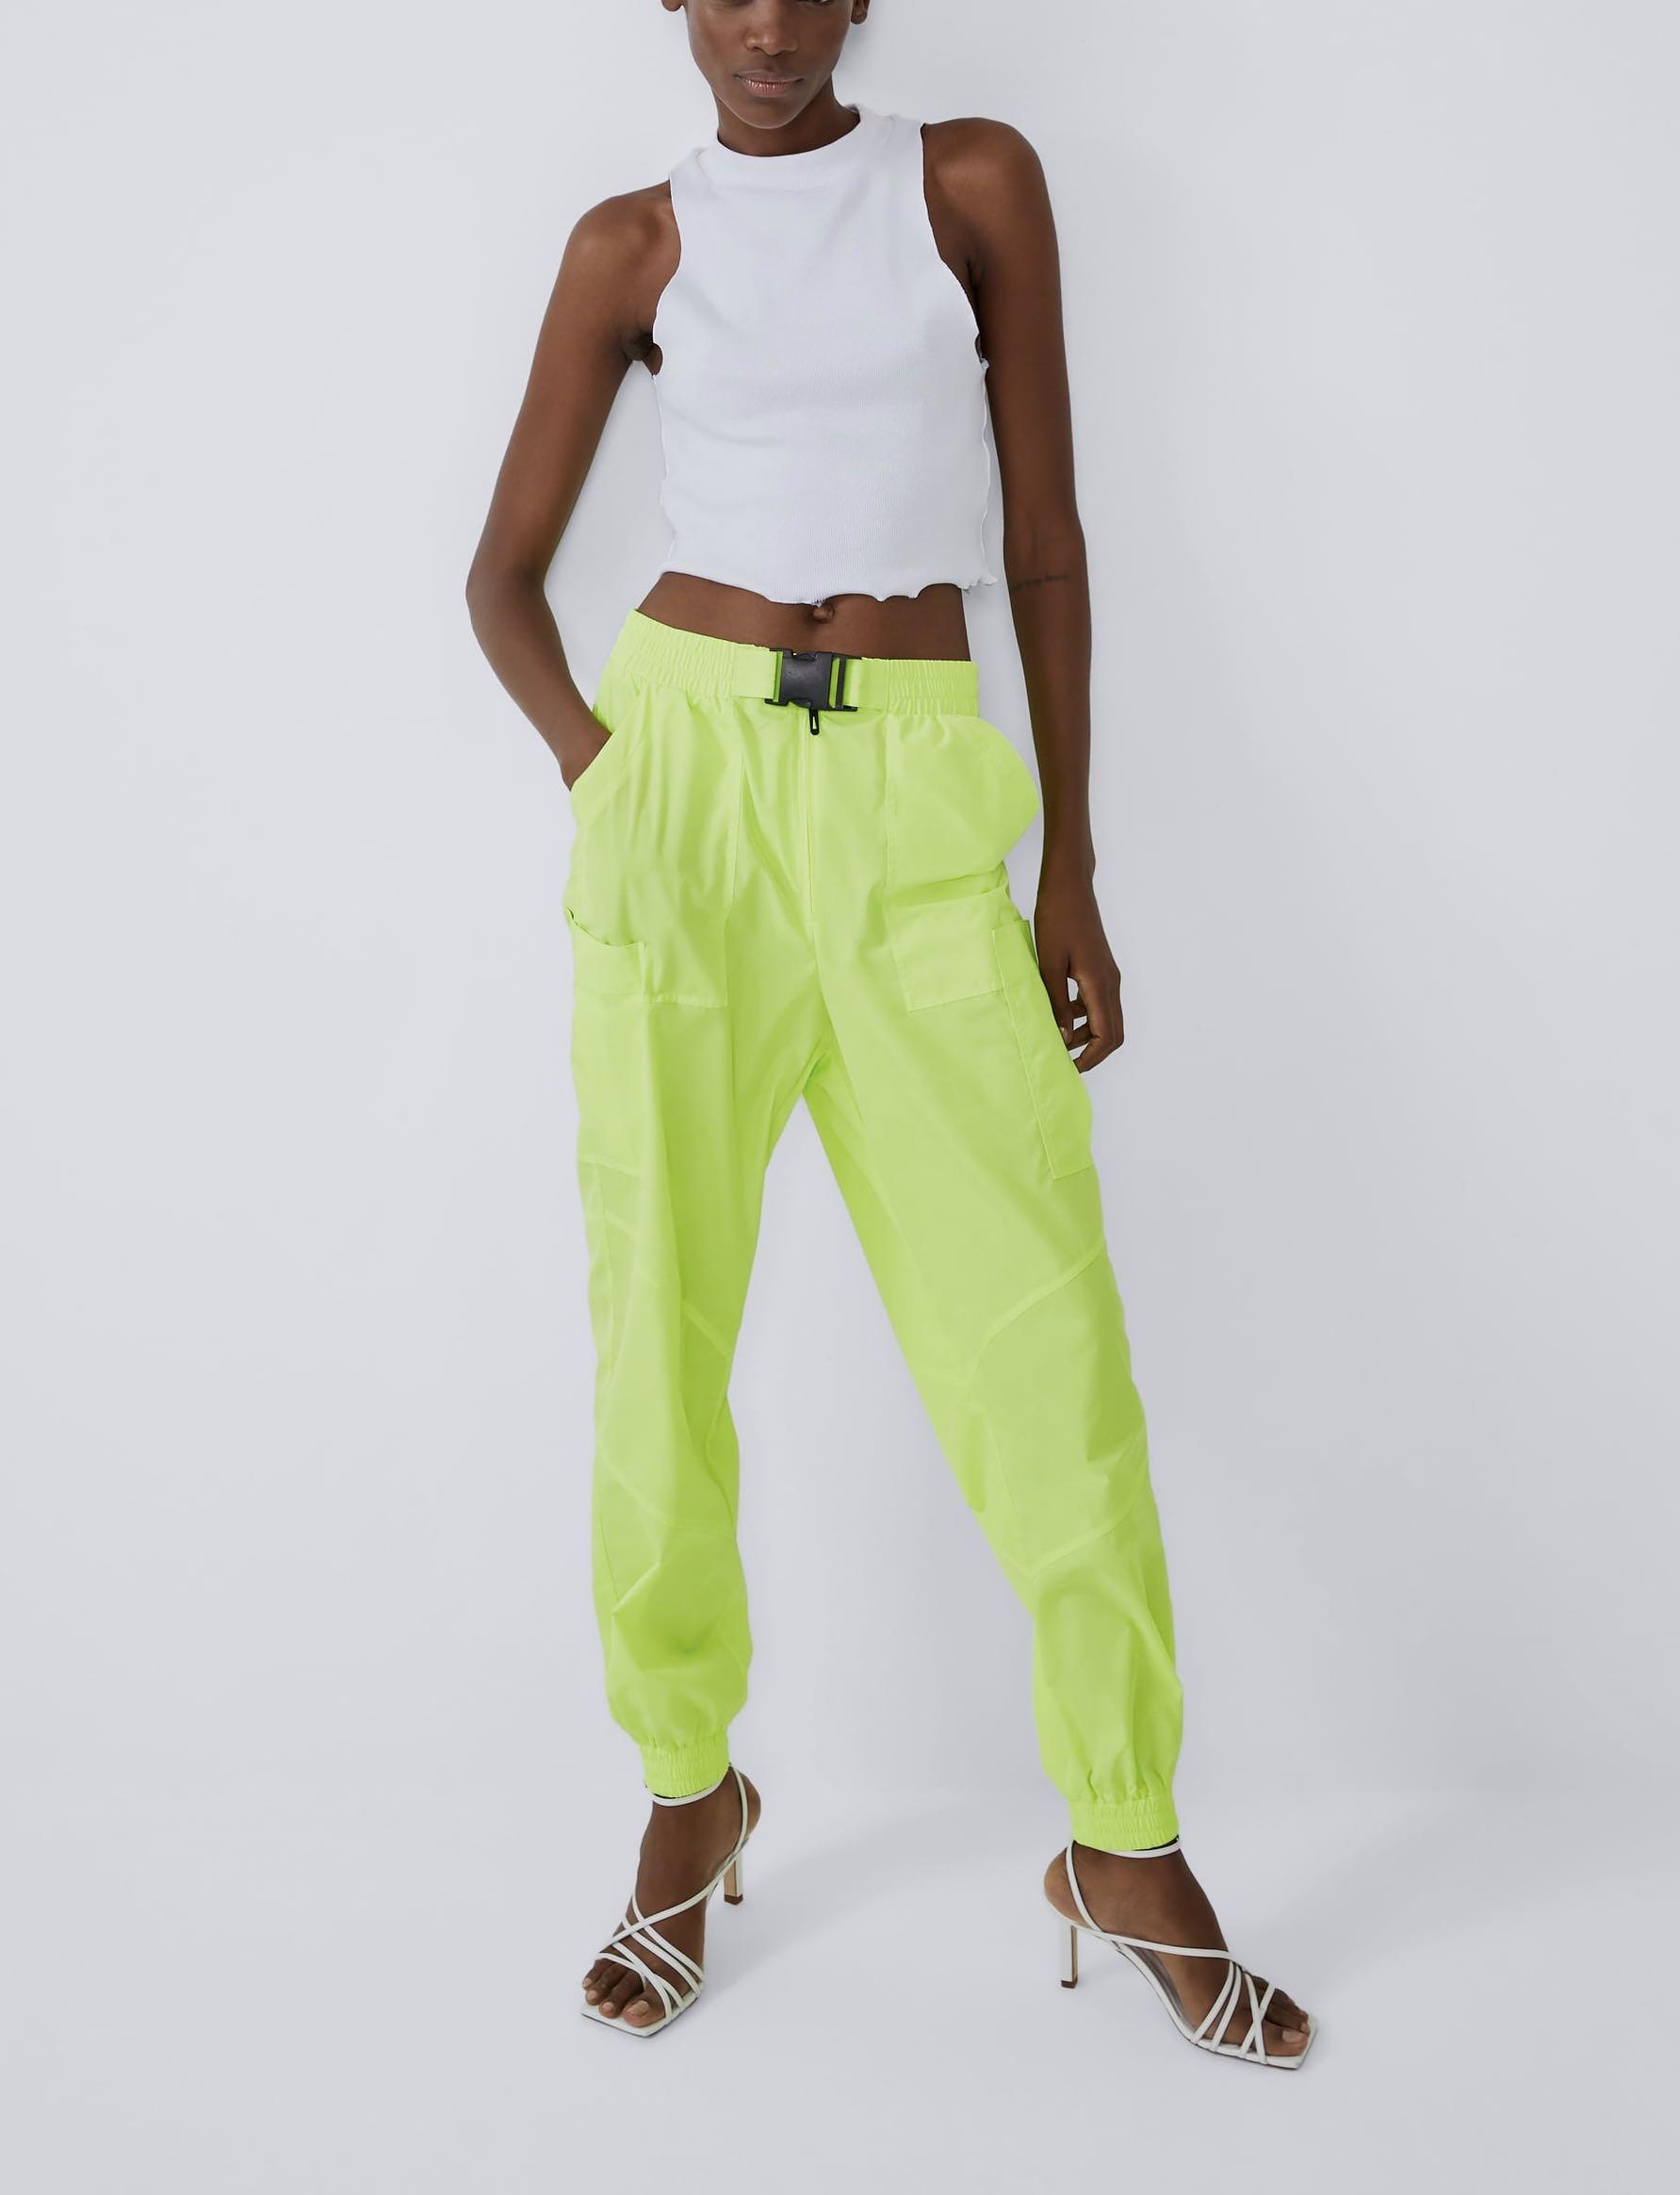 Zara nylon joggers neon yellow pants 